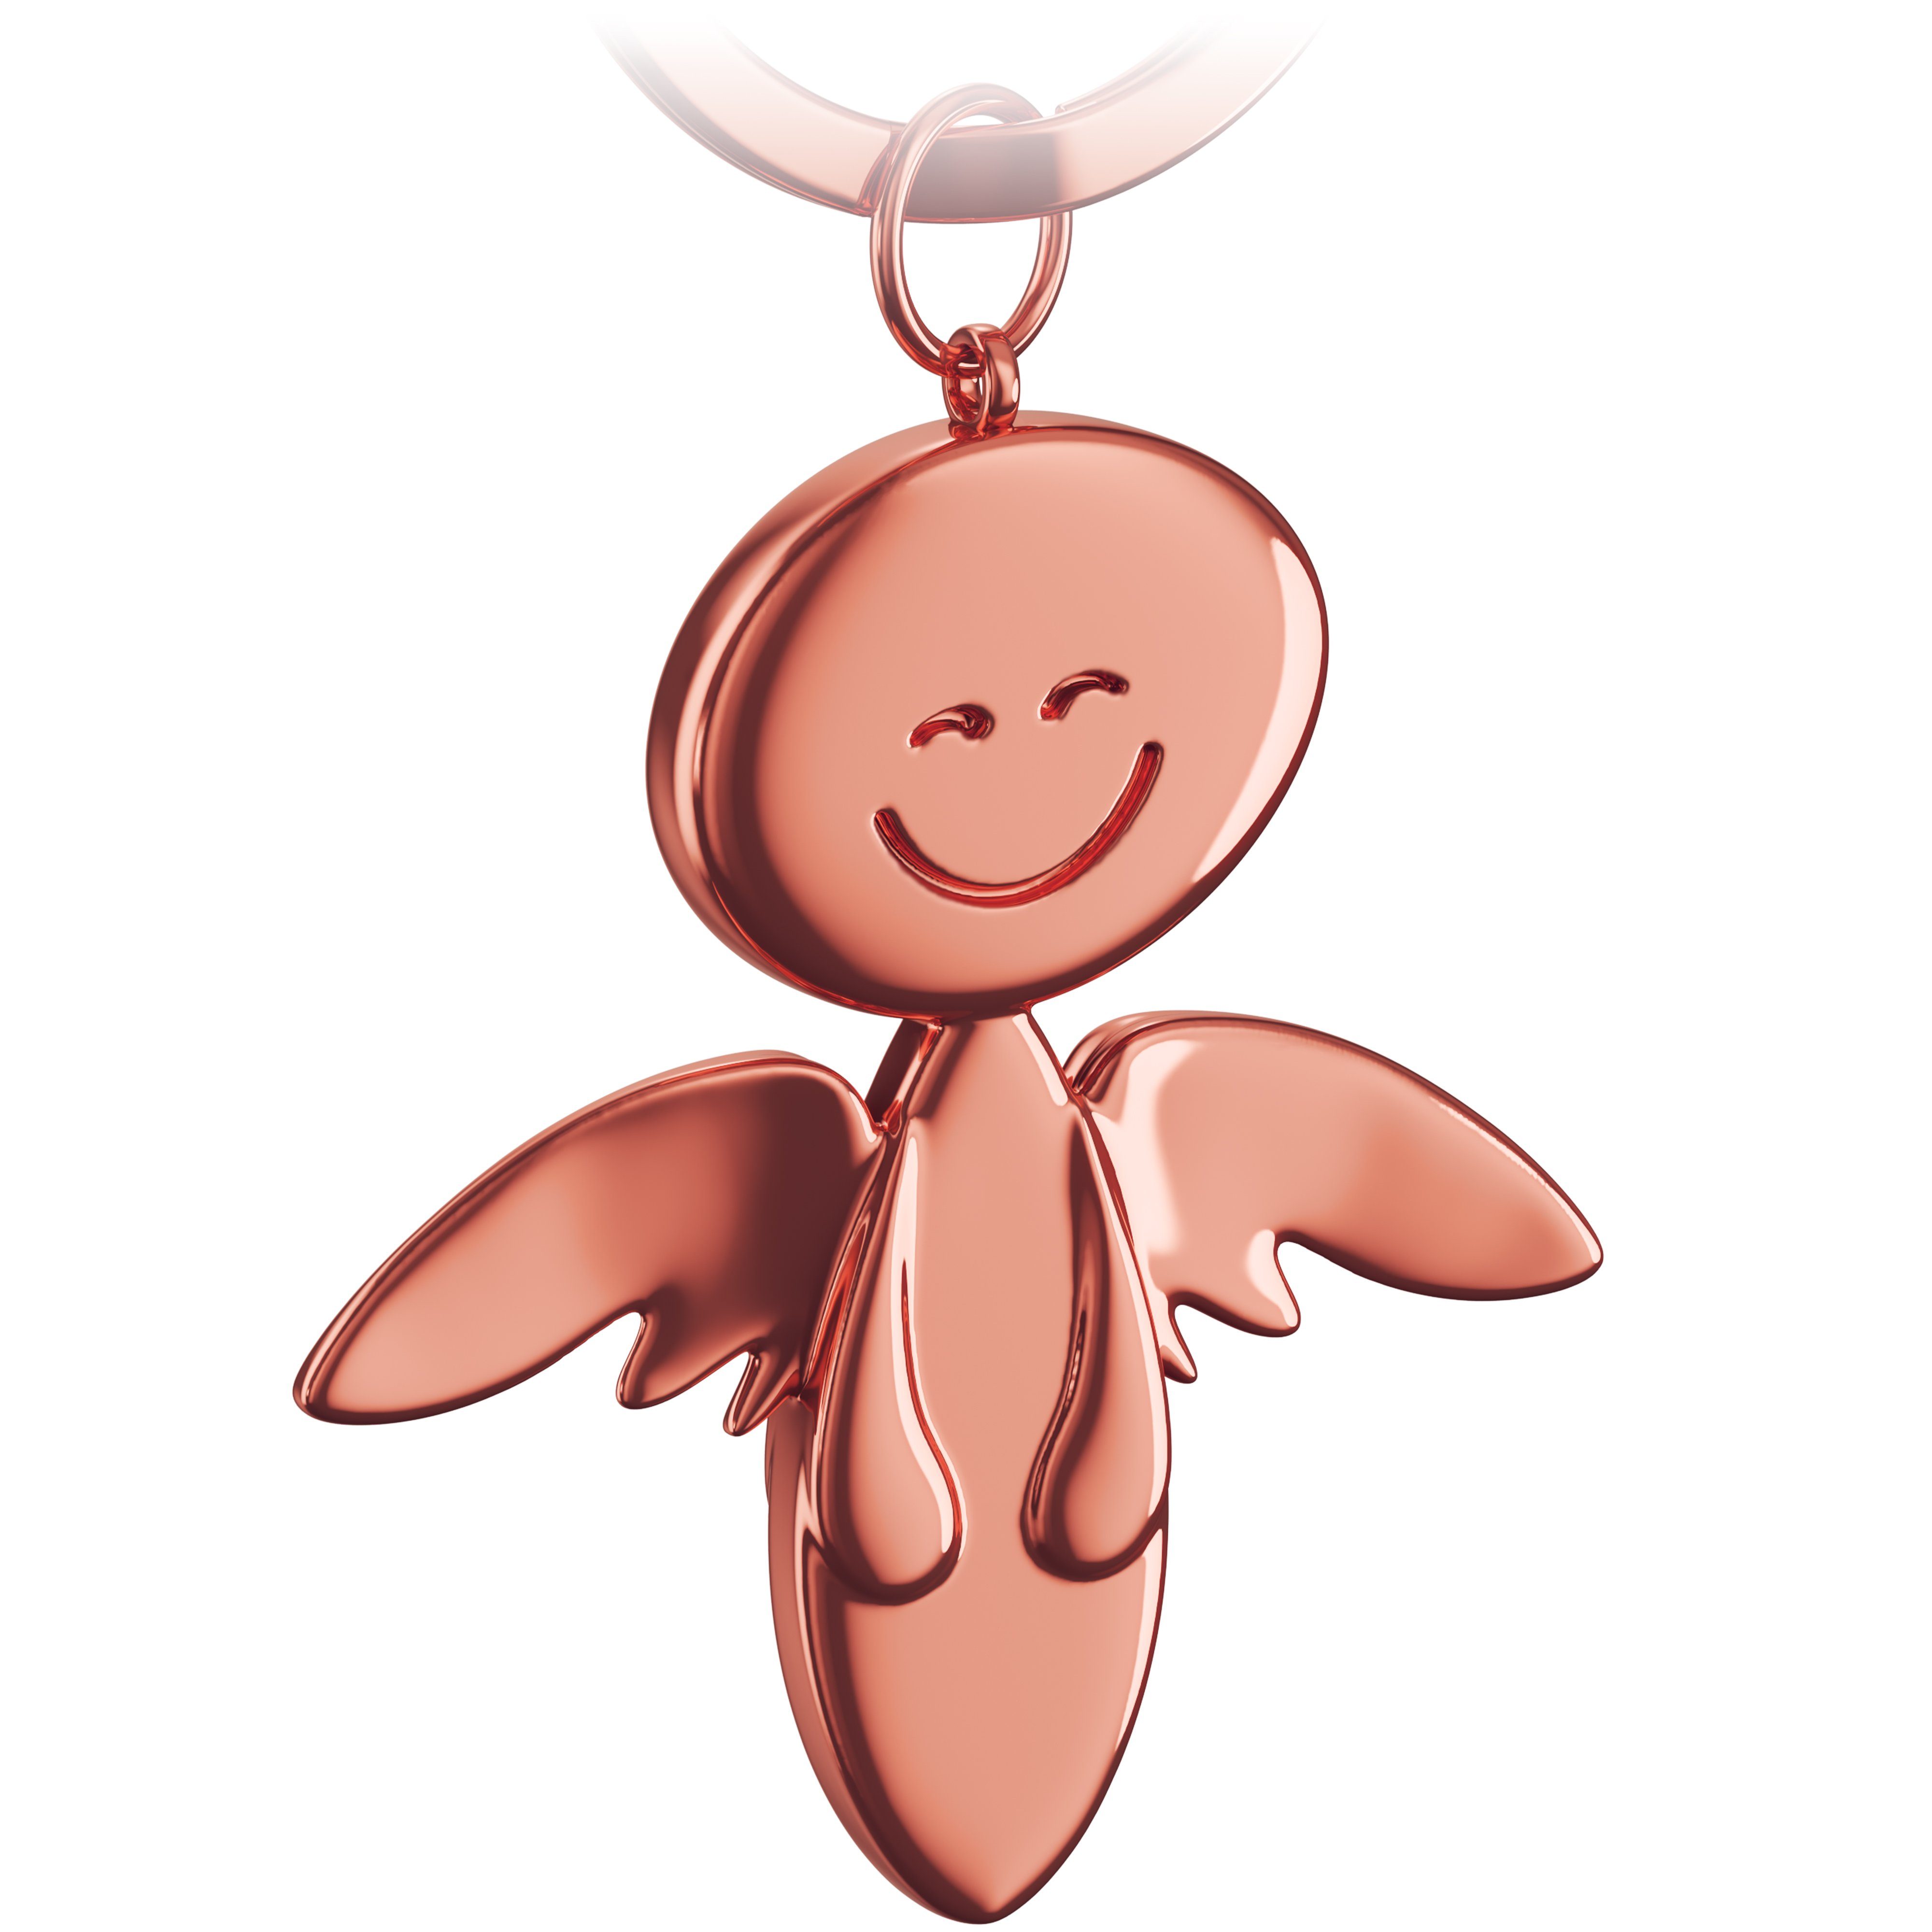 FABACH Schlüsselanhänger Schutzengel Smile - Engel Anhänger aus Metall -  Geschenk Glücksbringer